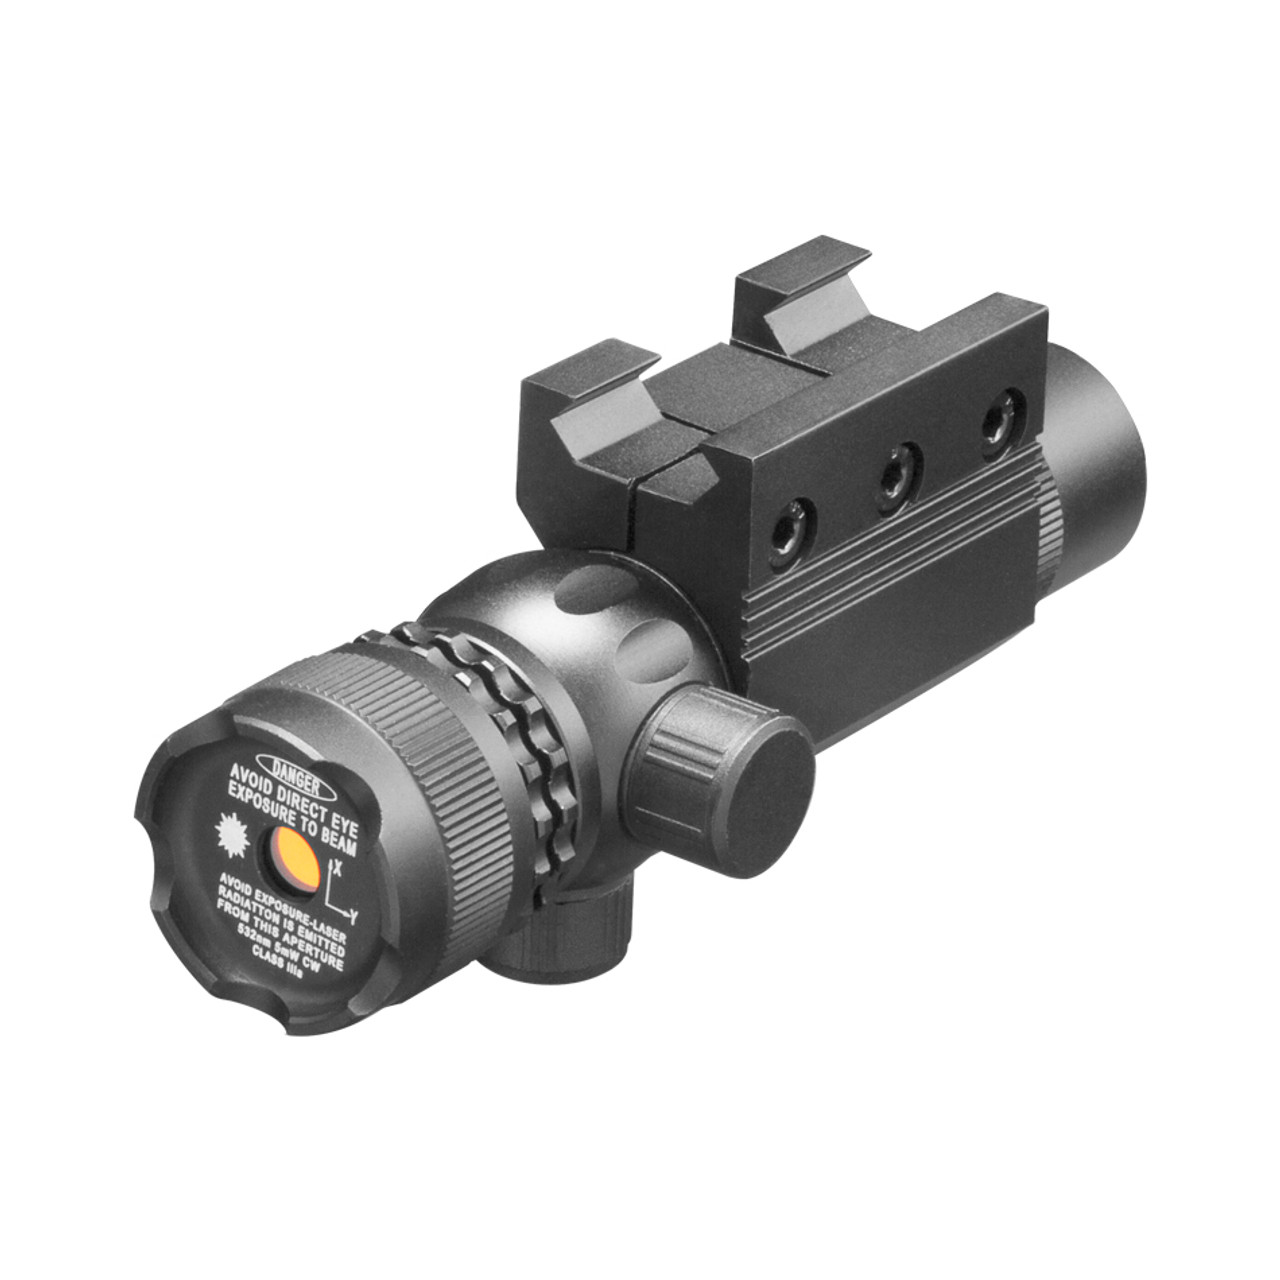 Aim Sports - 5mW Tactical green laser sight - External adjustments